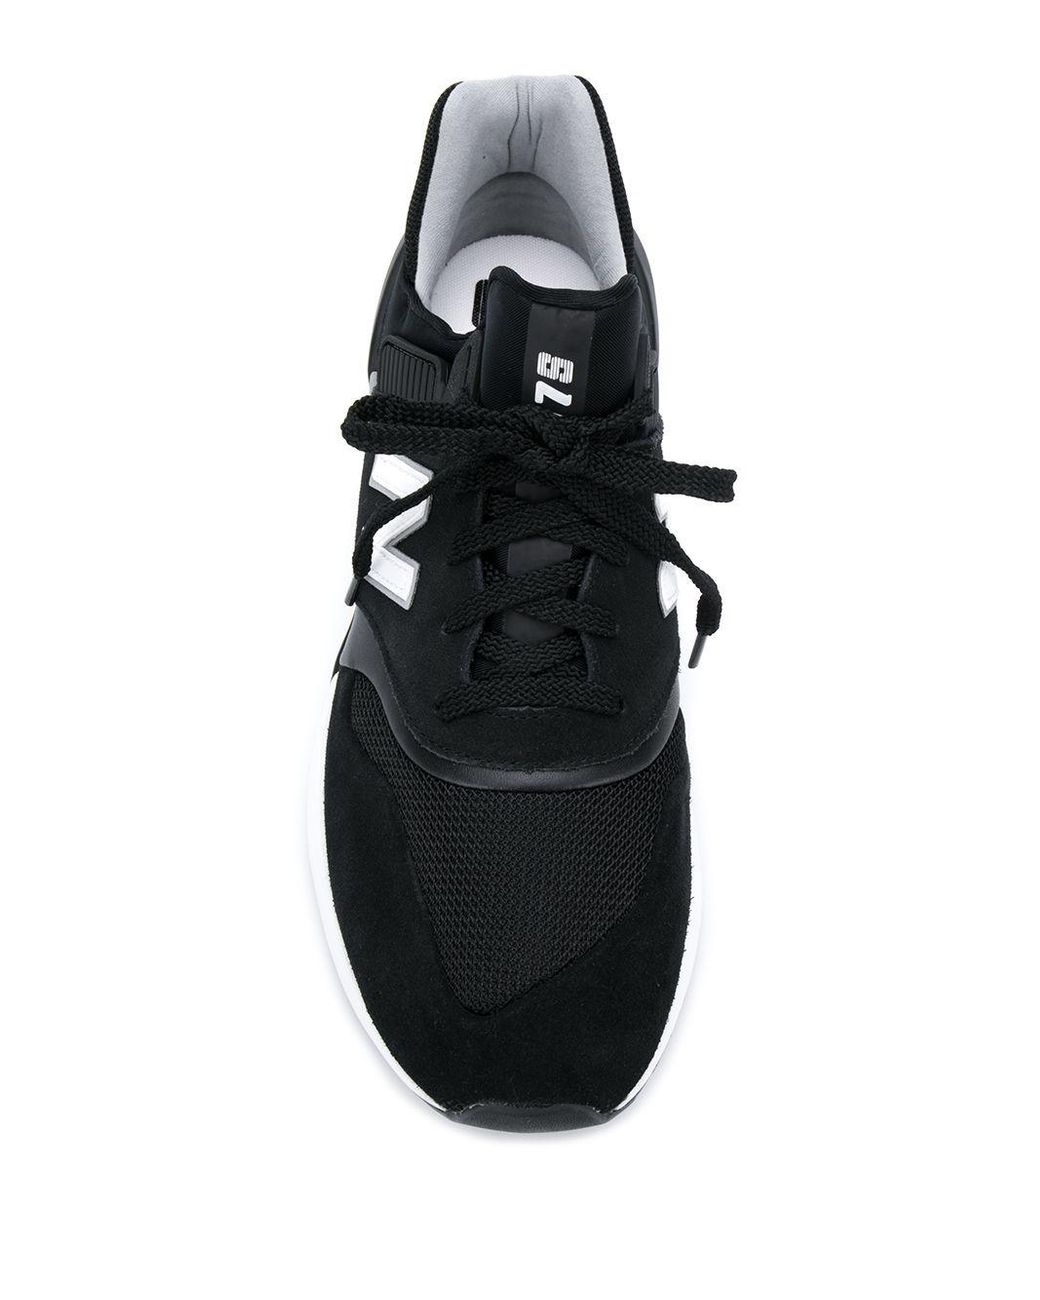 Zapatillas 997 ENCAP Reveal New Balance de Caucho de color Negro para  hombre | Lyst